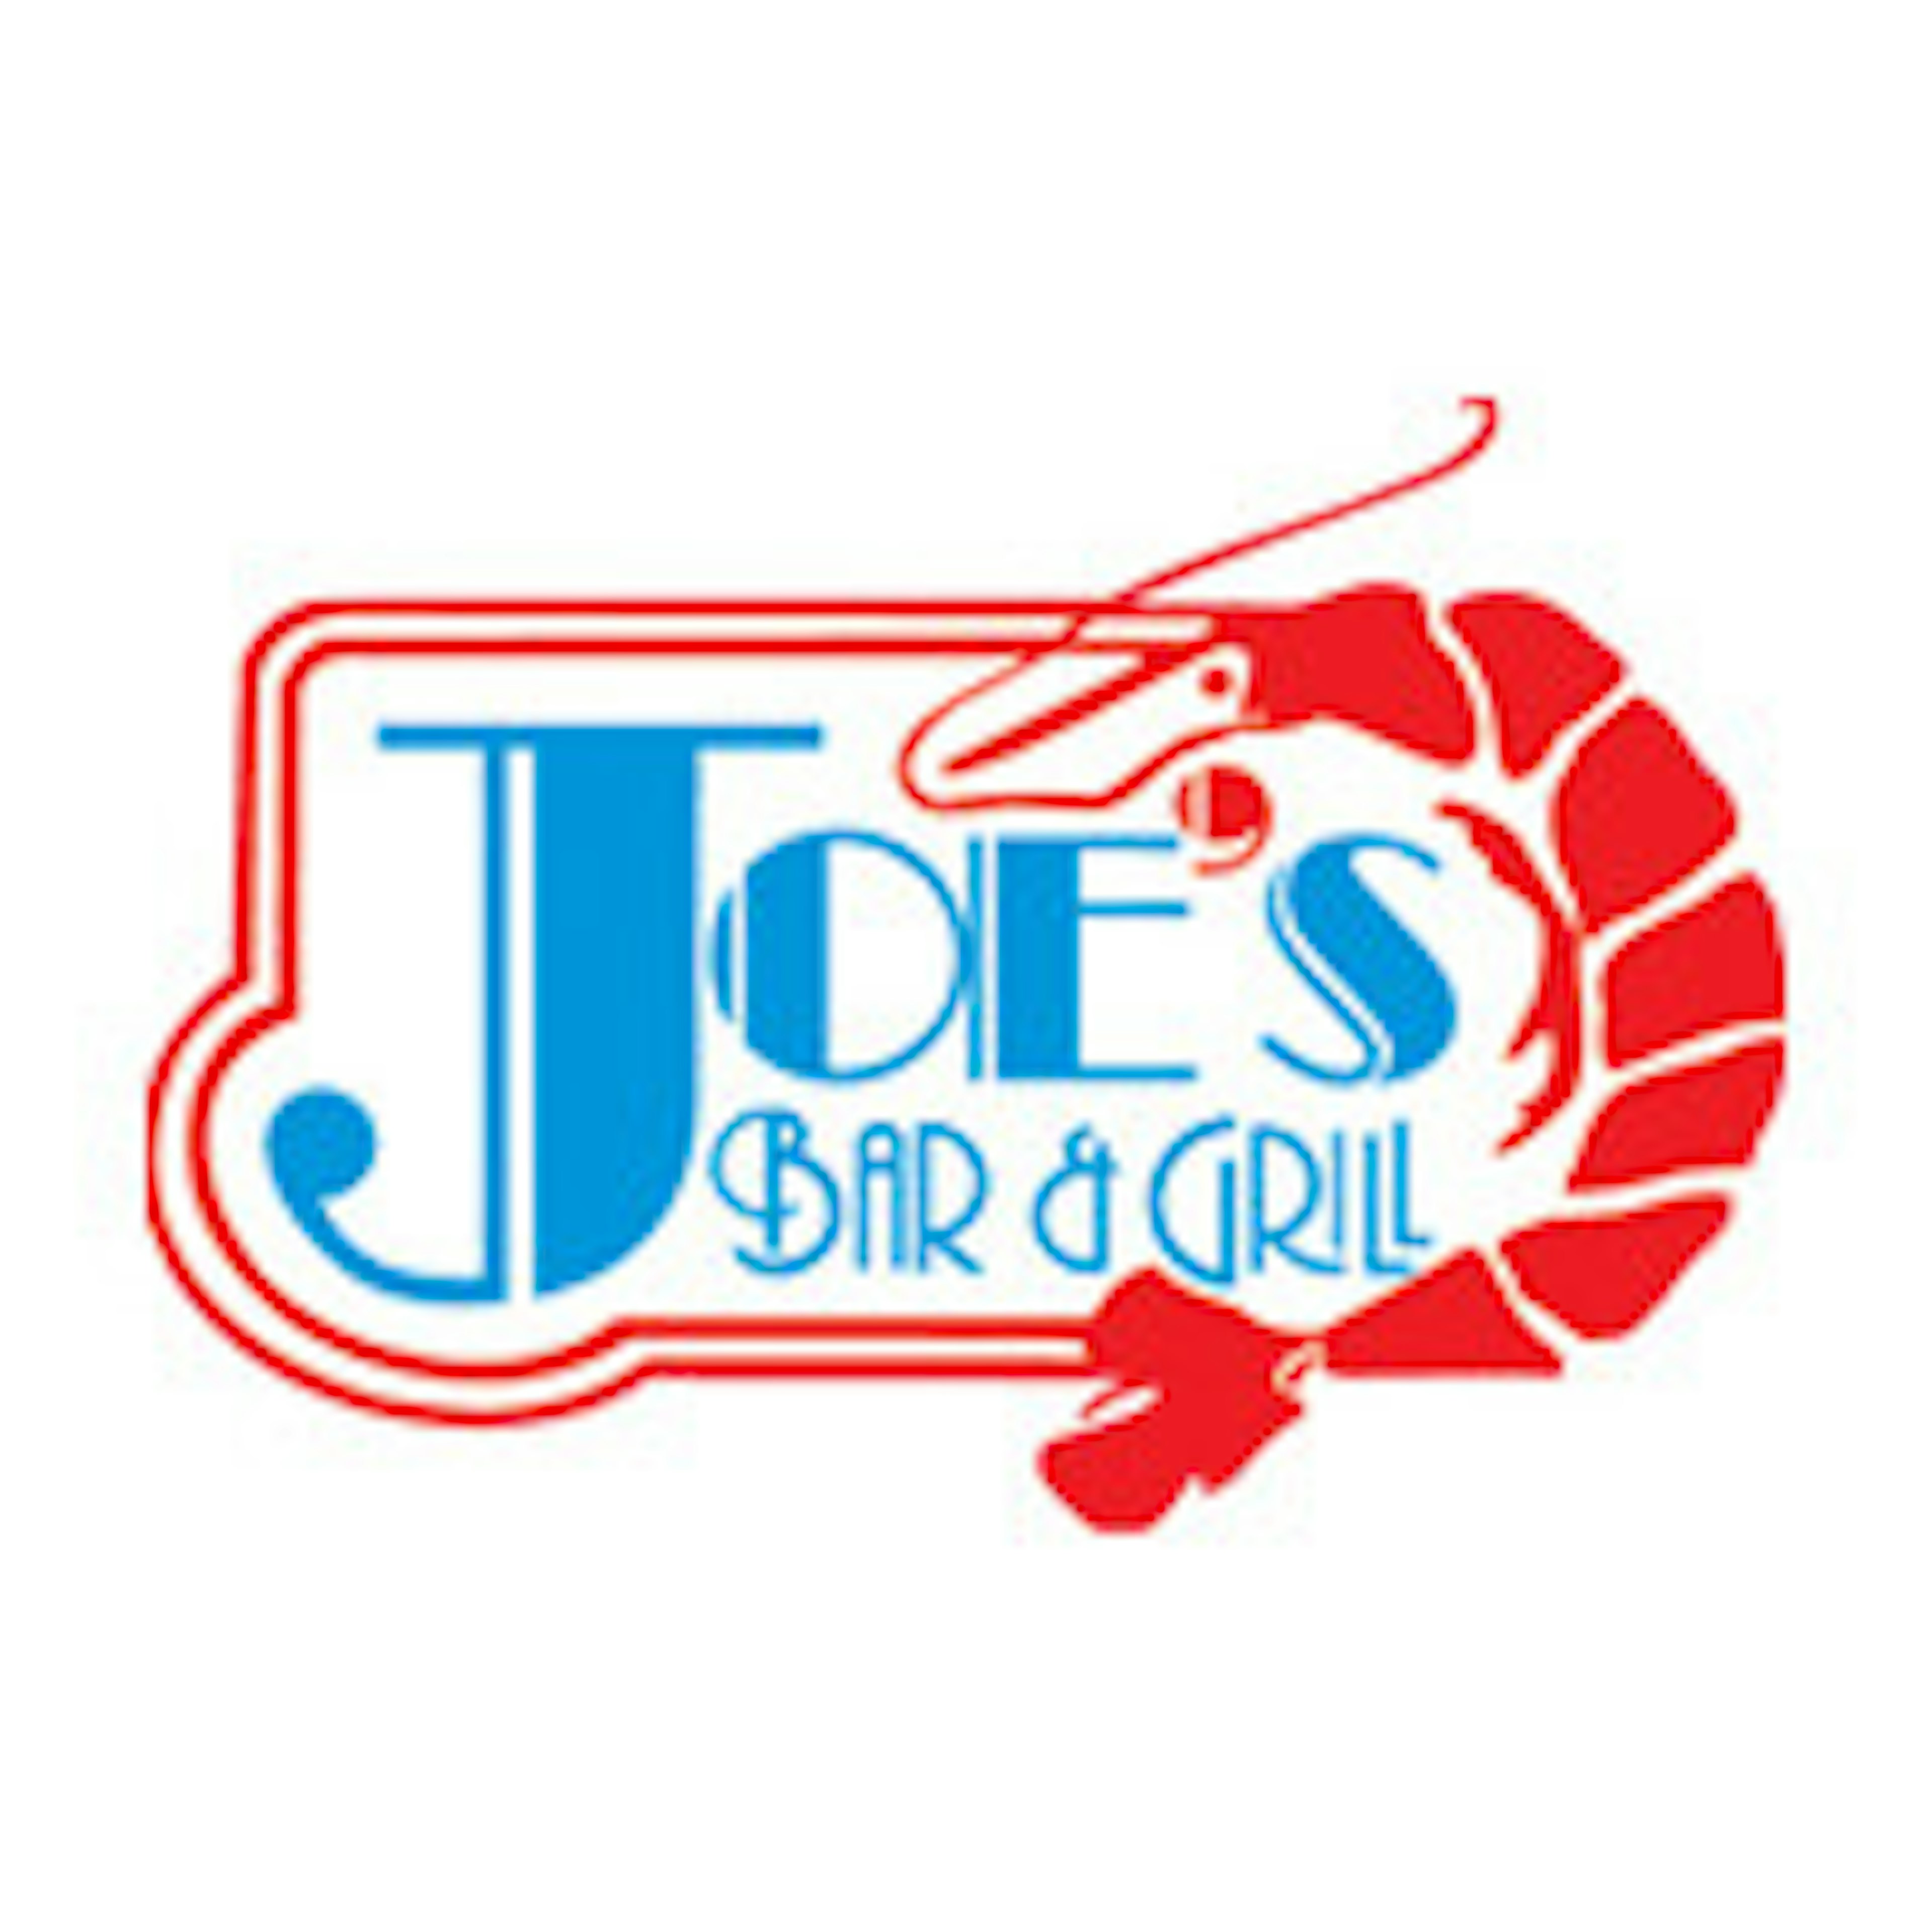 Joe’s Bar and Grill